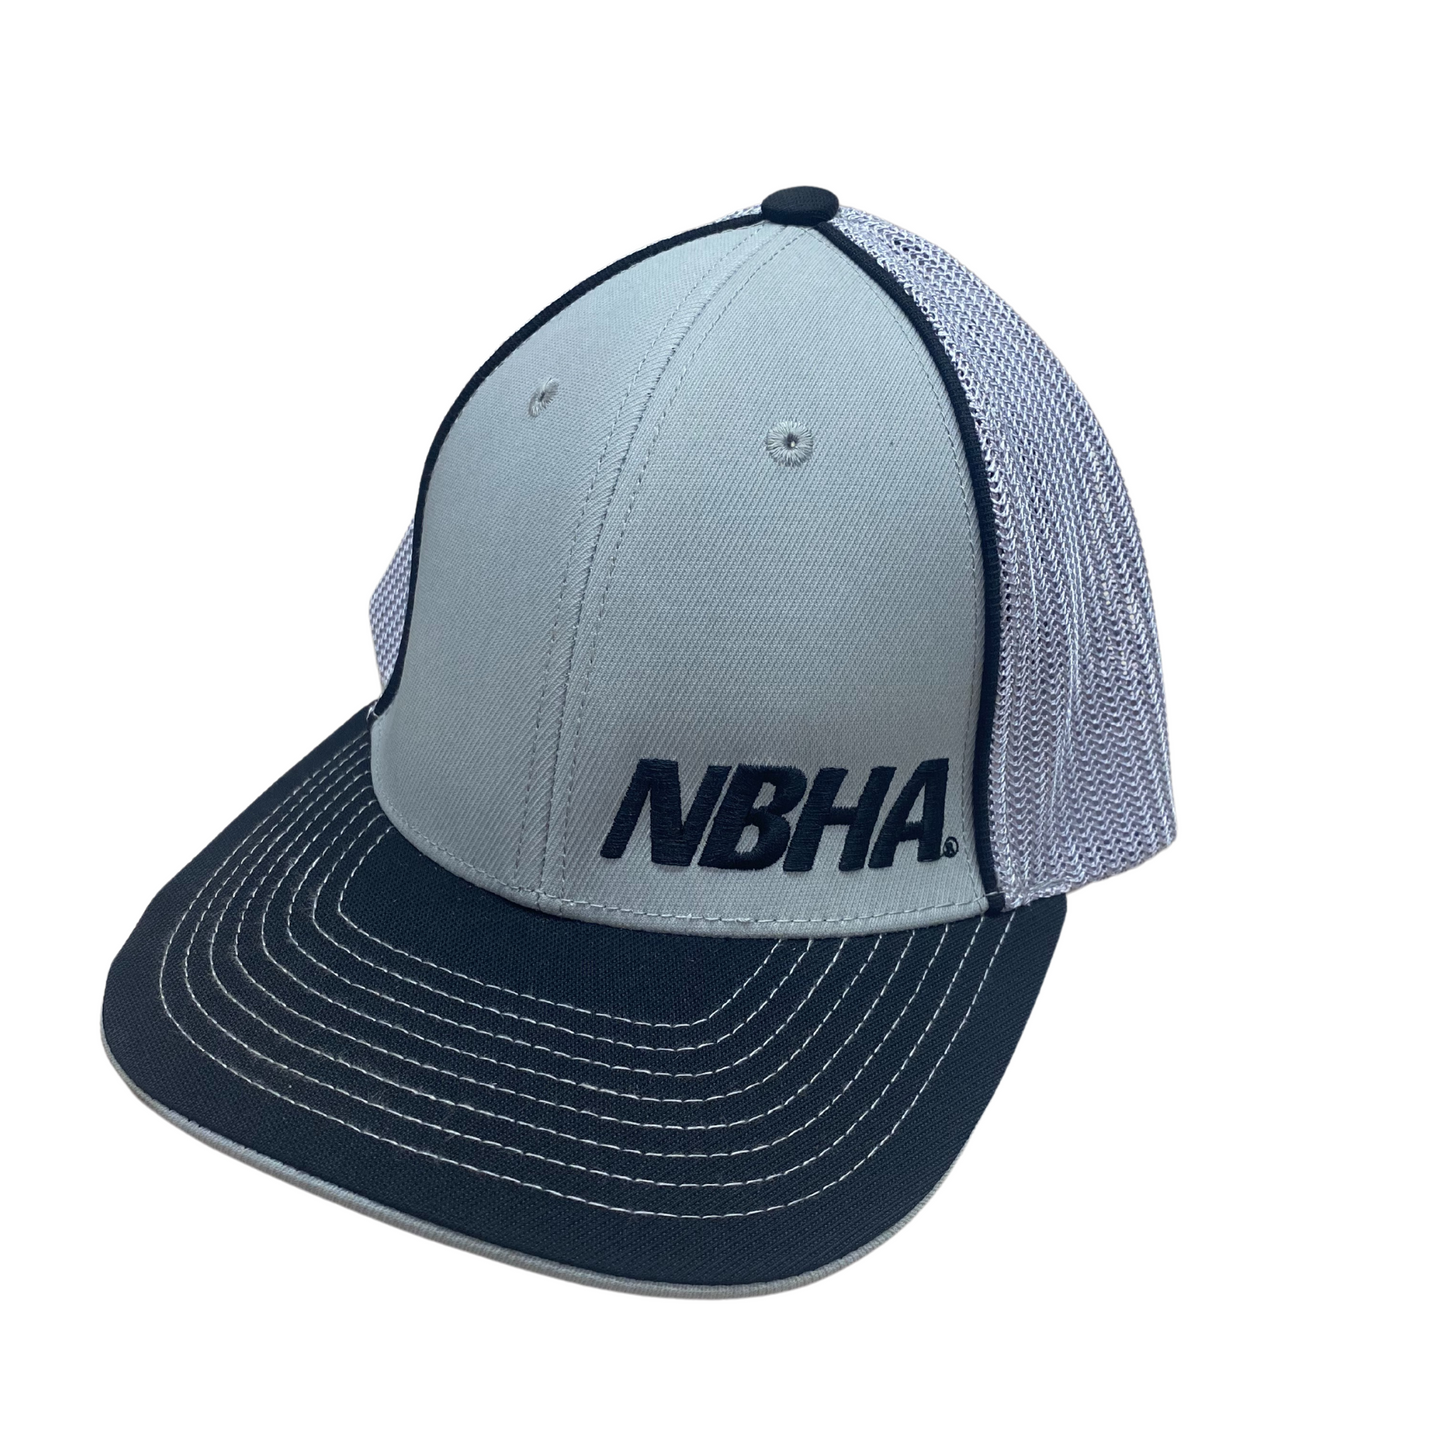 NBHA Trucker Hat : Black/Grey/Grey